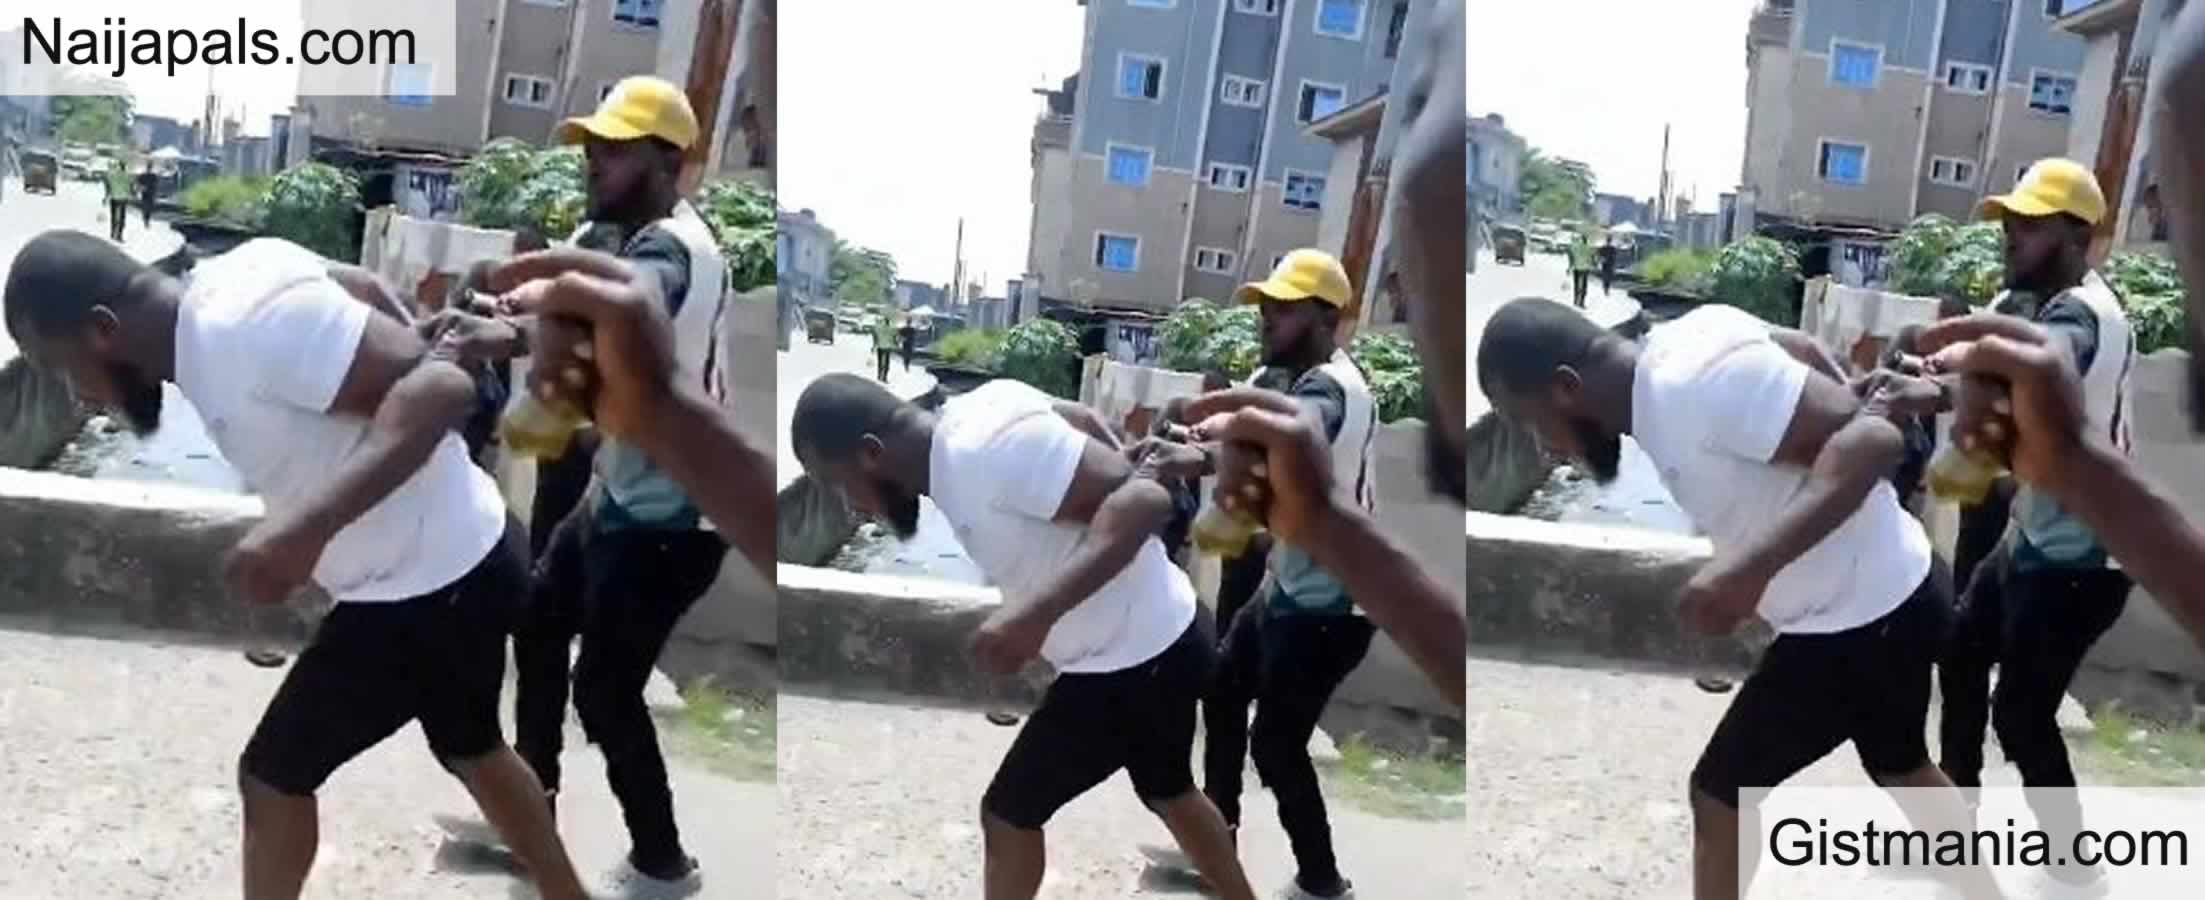 VID&#059; Nigerian Man Beaten To Pulp Before Being Thrown In Gutter For Allegedly Being Gay